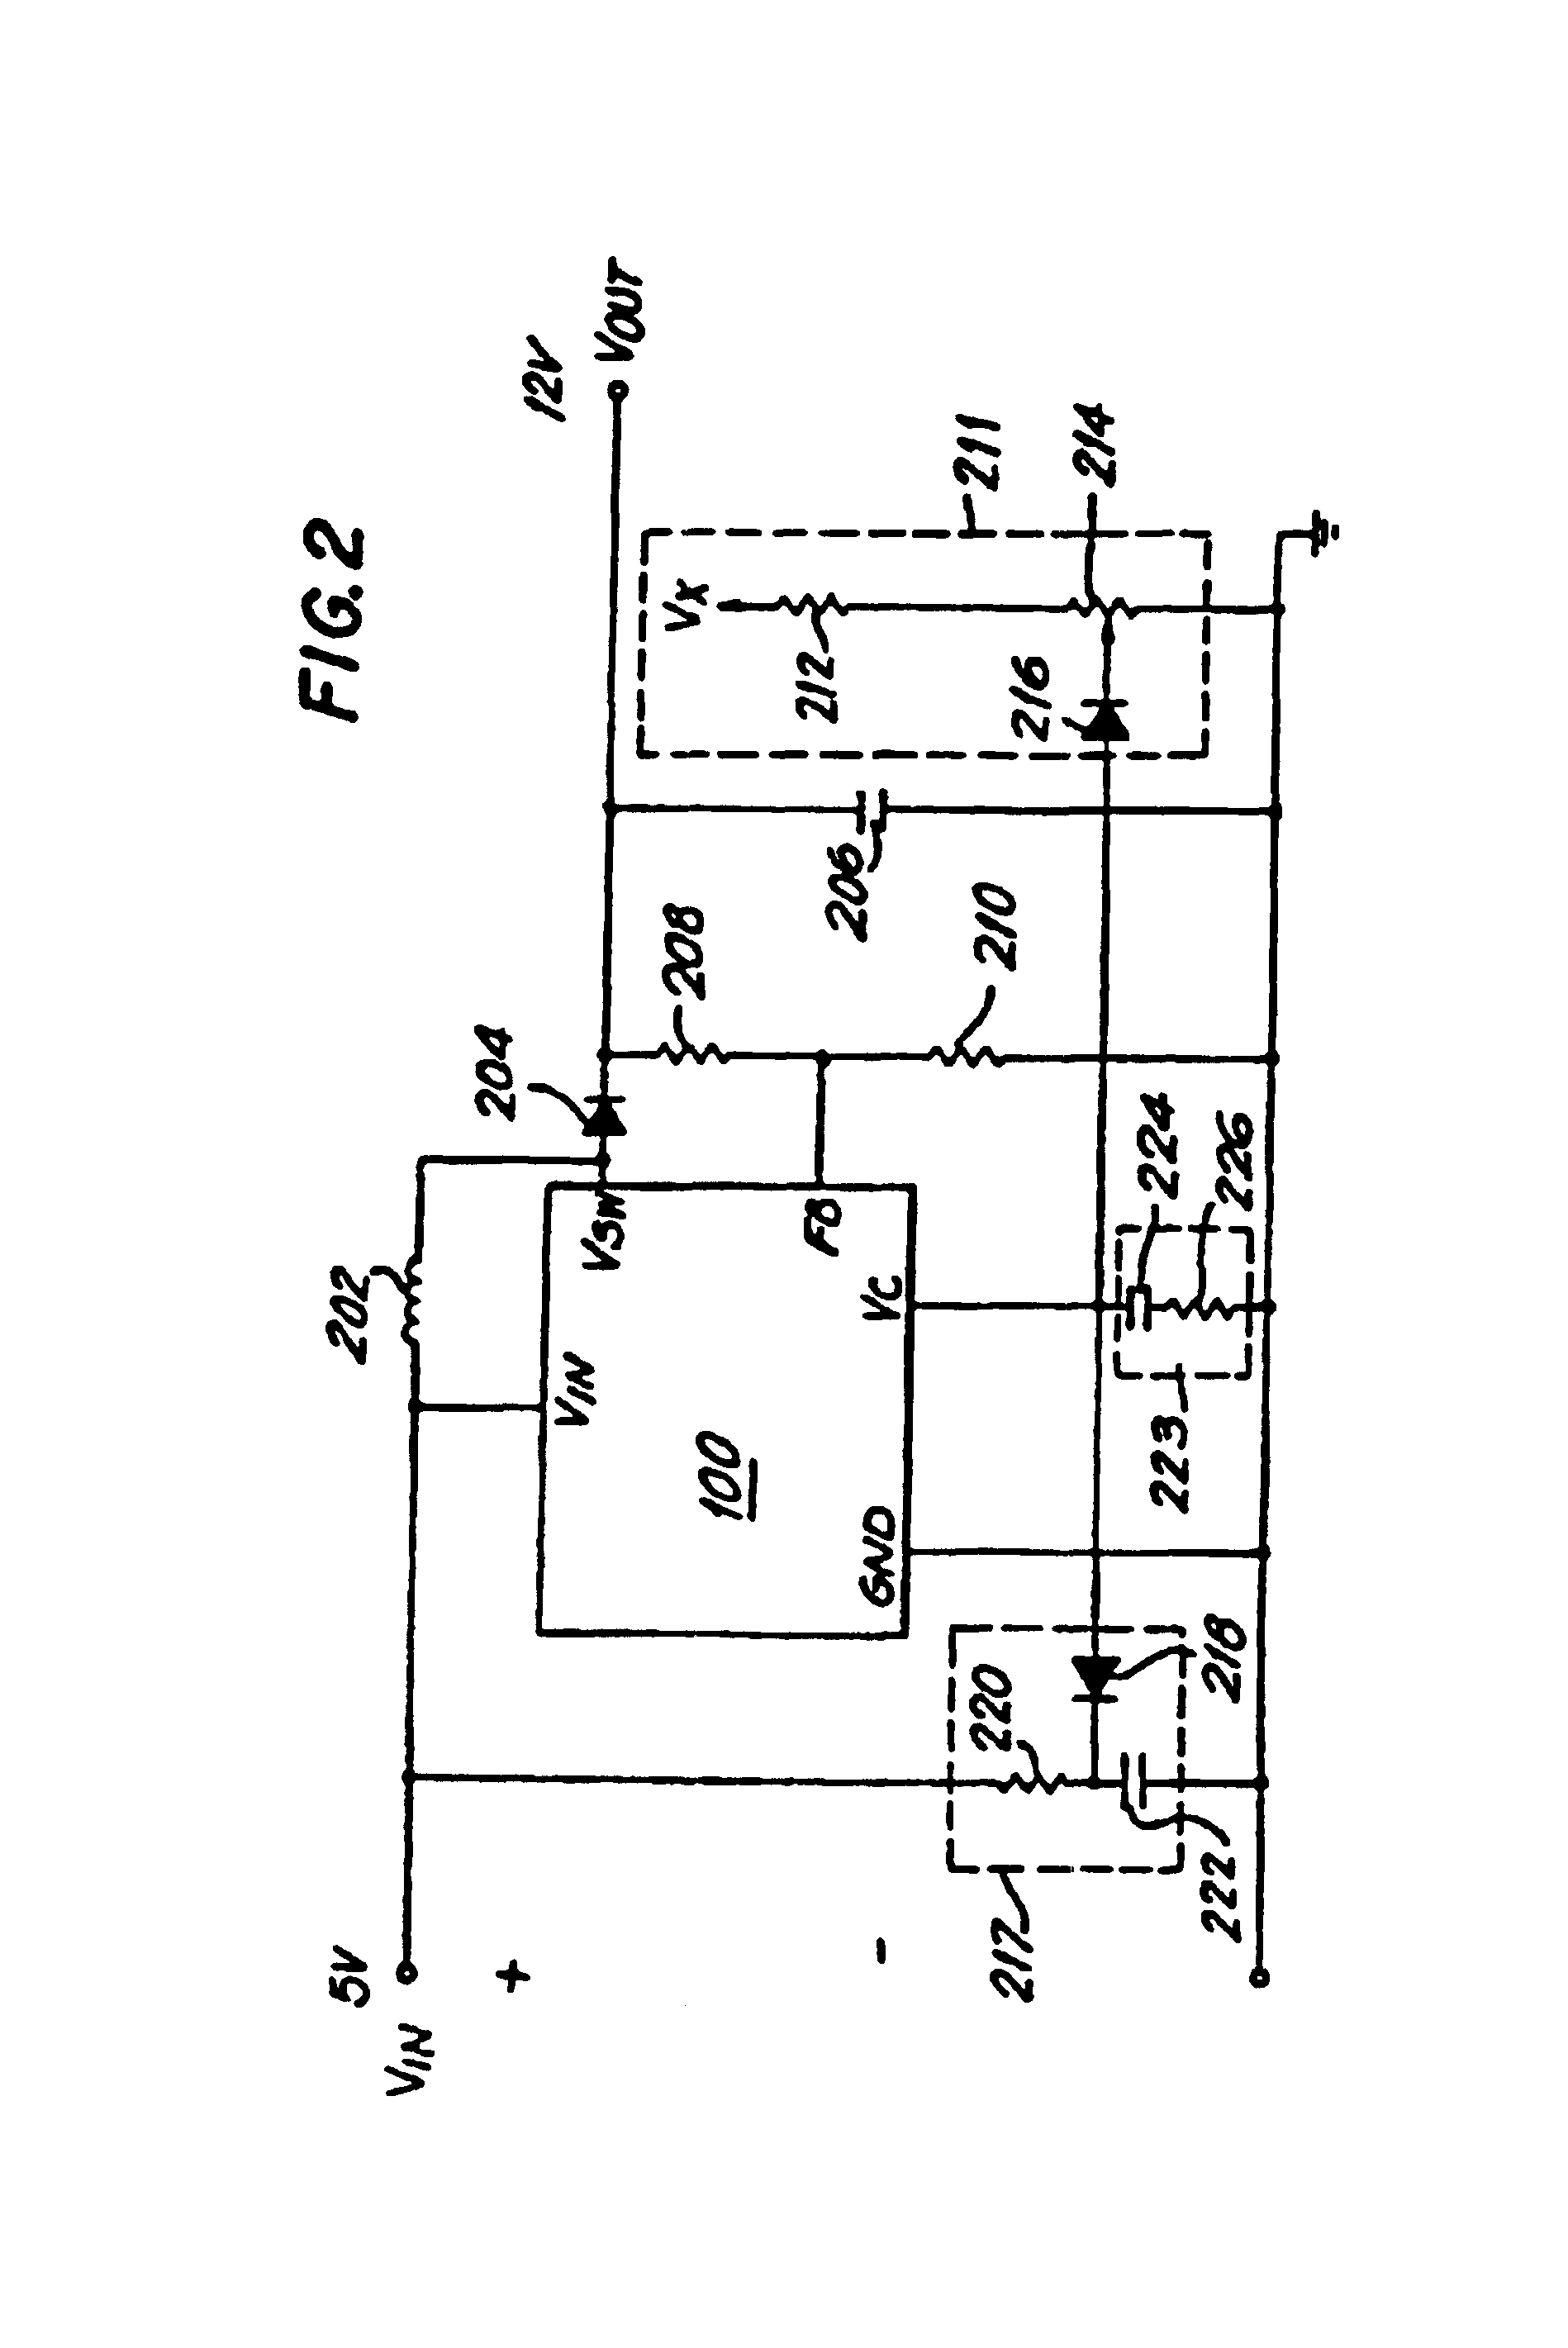 Switching voltage regulator circuit